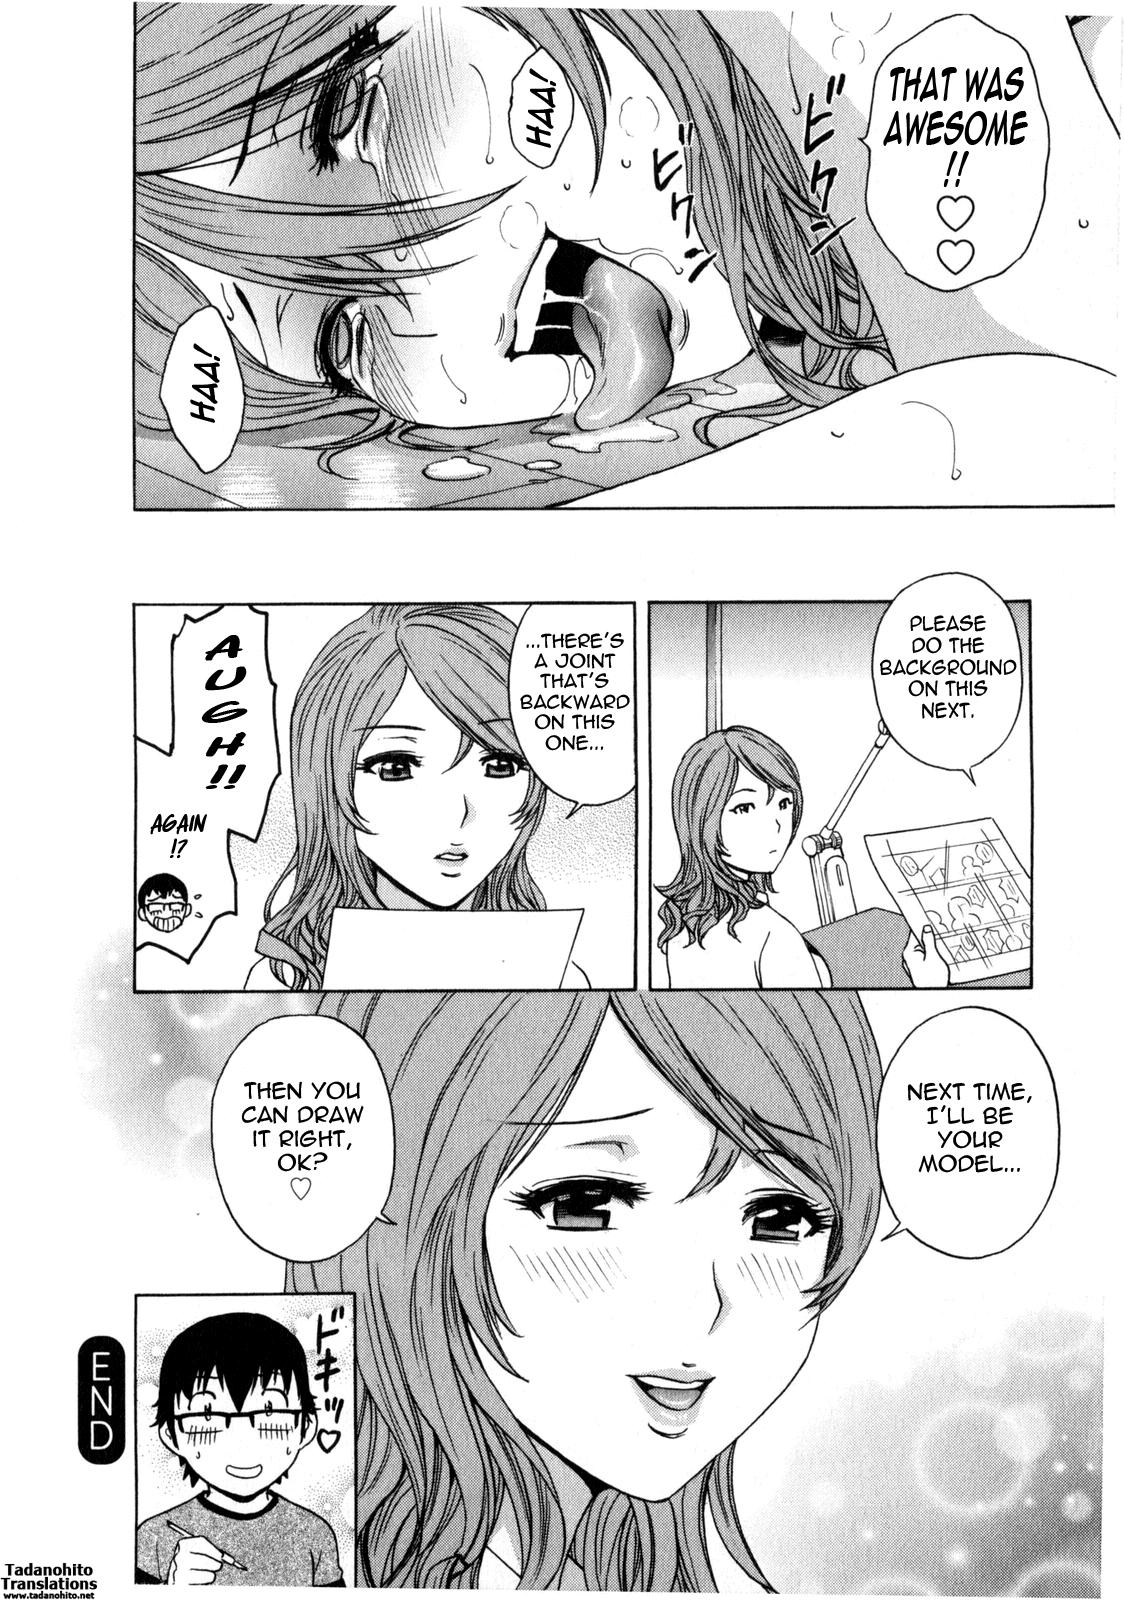 [Hidemaru] Life with Married Women Just Like a Manga 2 - Ch. 1-8 [English] {Tadanohito} 44